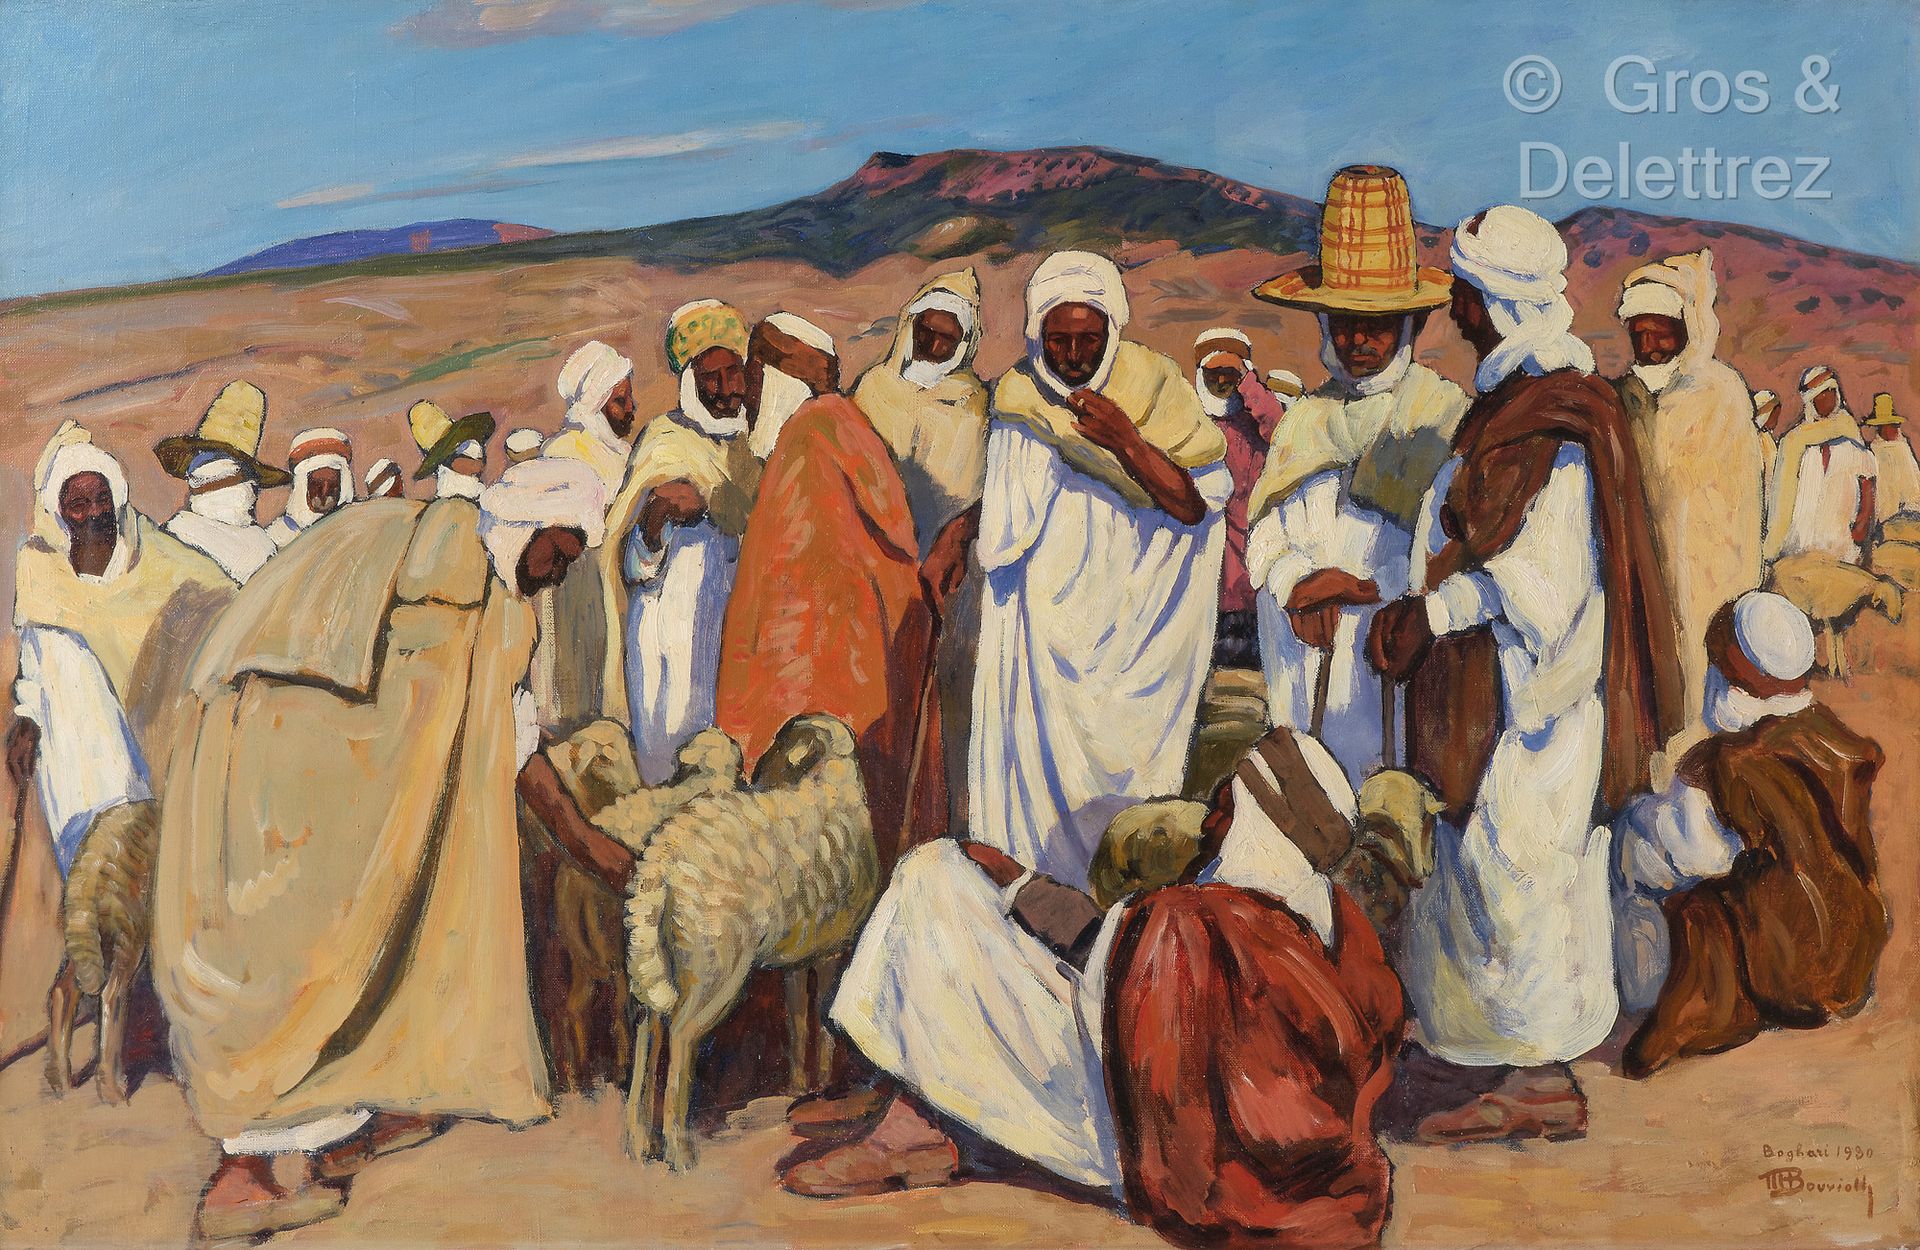 Null 莫里斯-布维奥莱(1893-1971)
博格瑞的羊群市场场景，1930年
布面油画。
右下方有签名、位置和日期。
64 x 100 cm

关于该艺术&hellip;